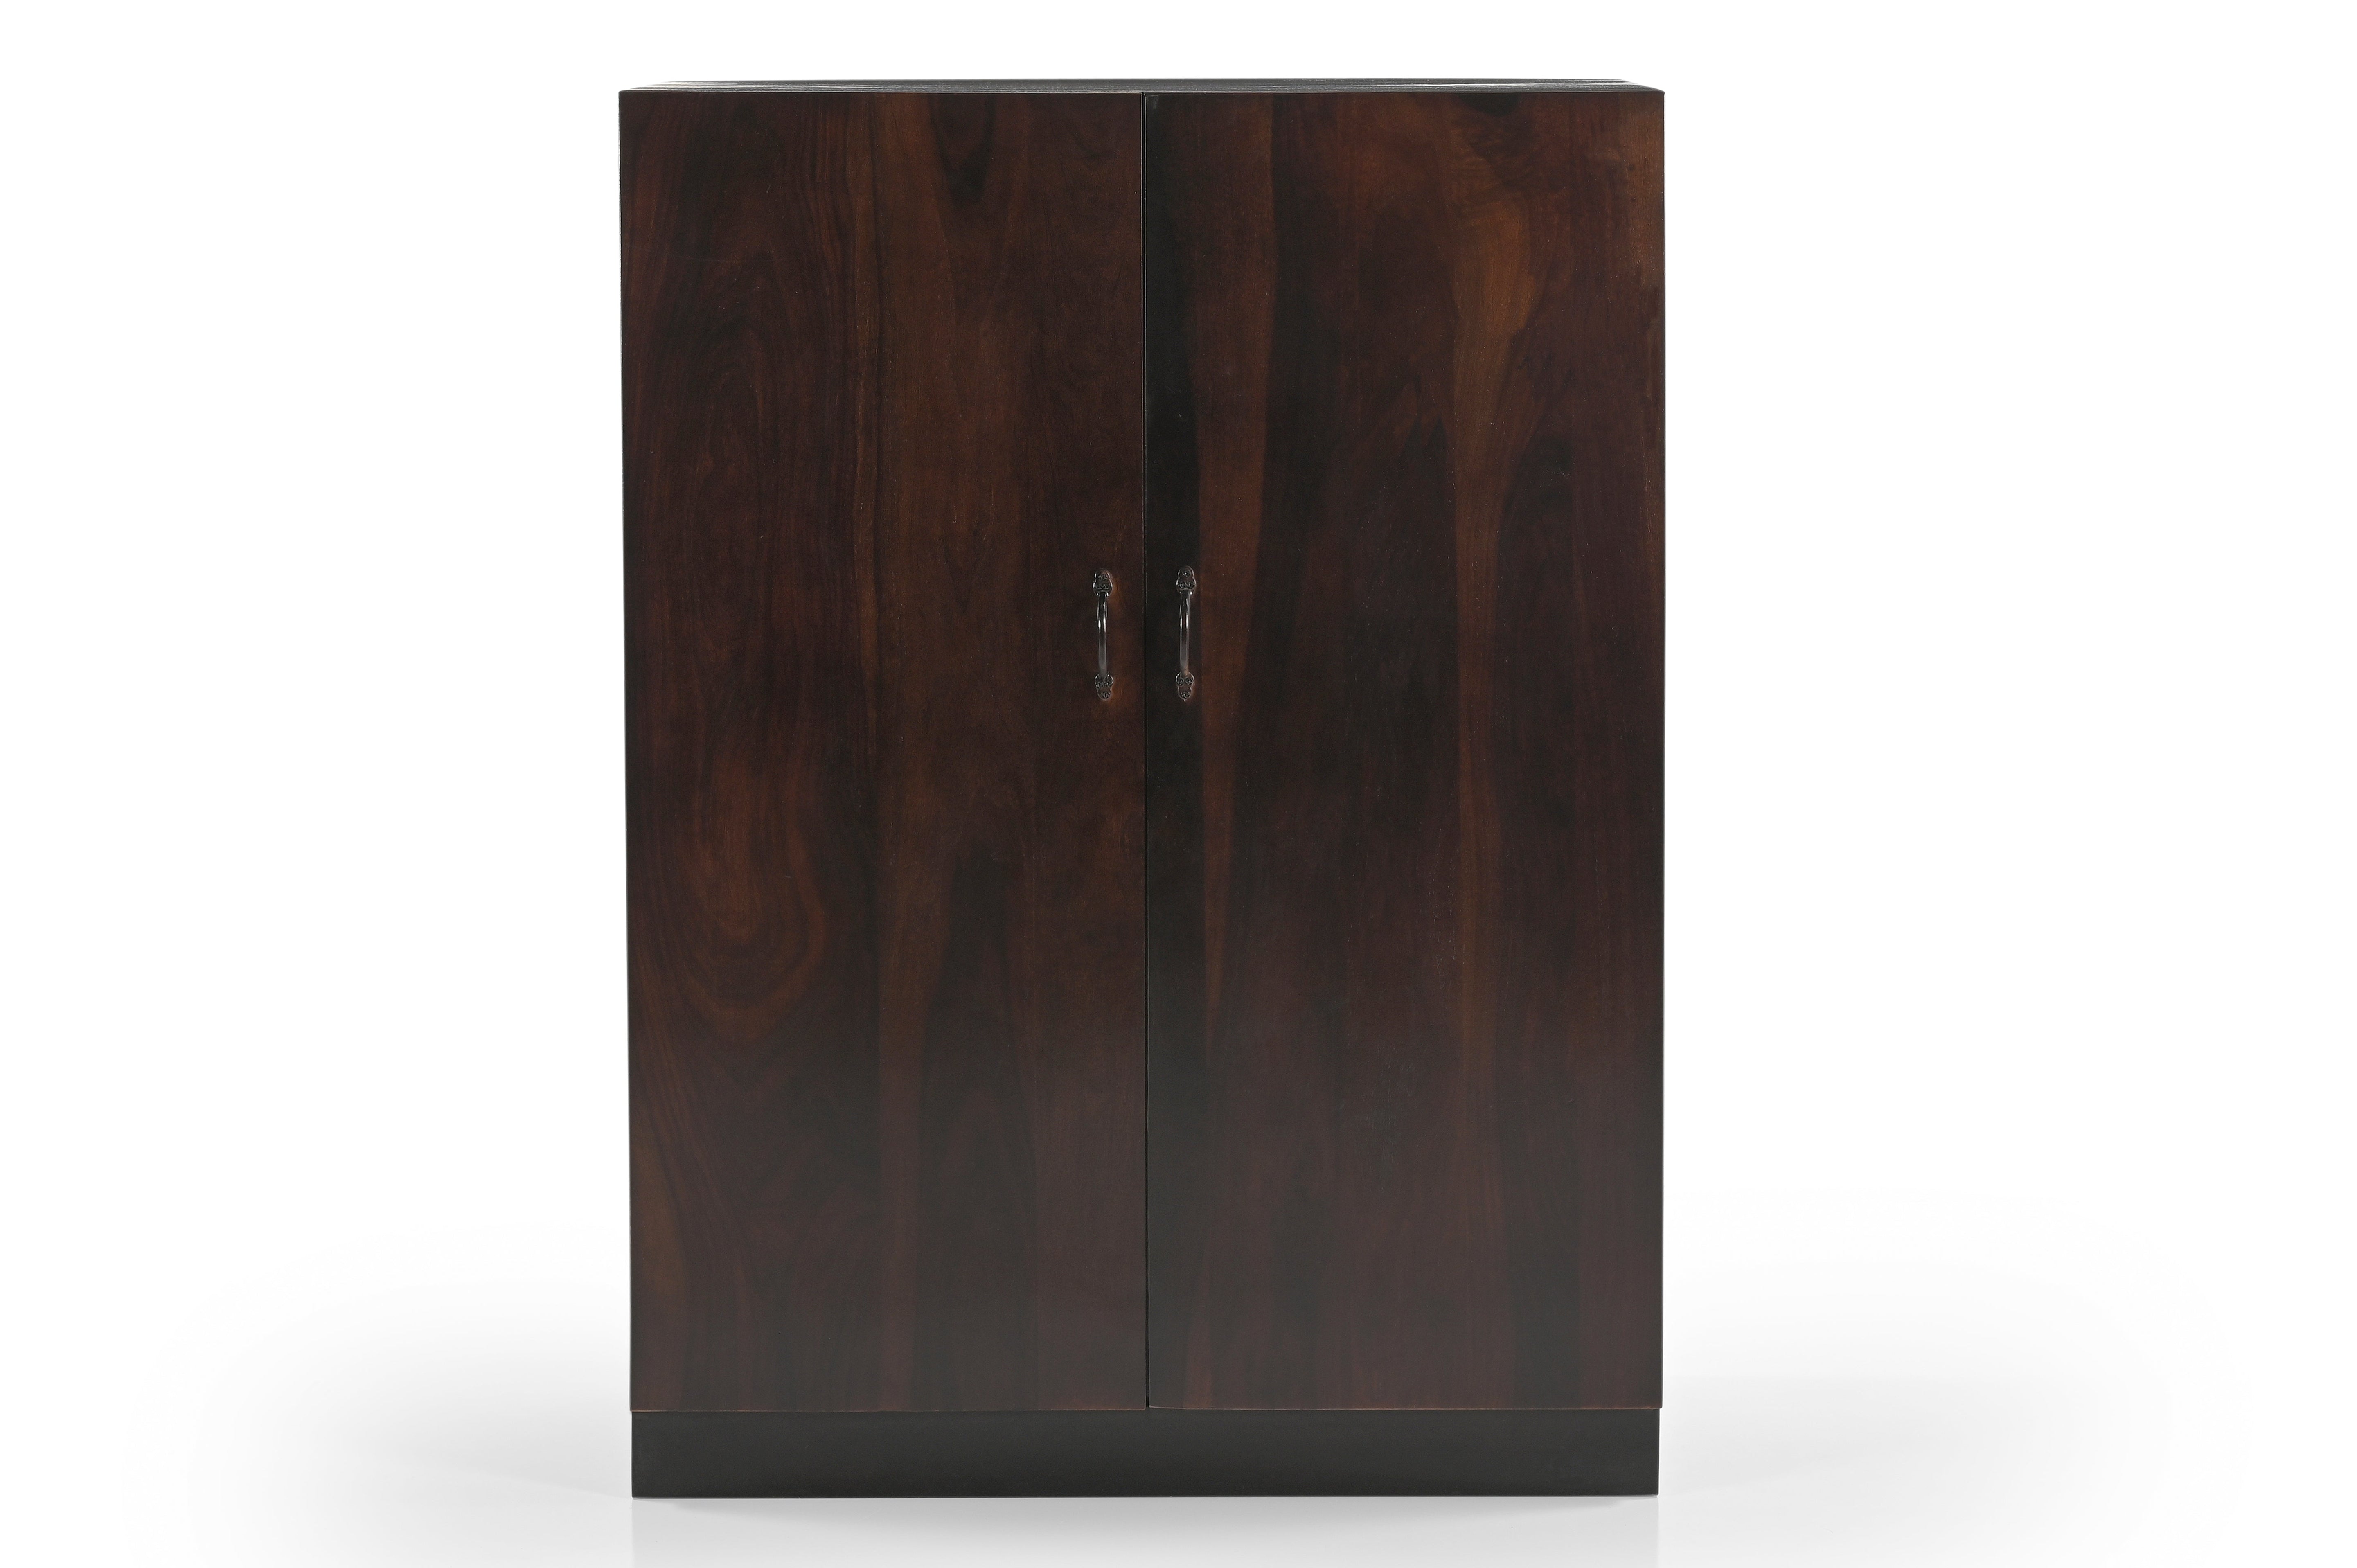 Ambry Sheesham Wood Bar Cabinet In Dark Reddish Brown Two Drawers